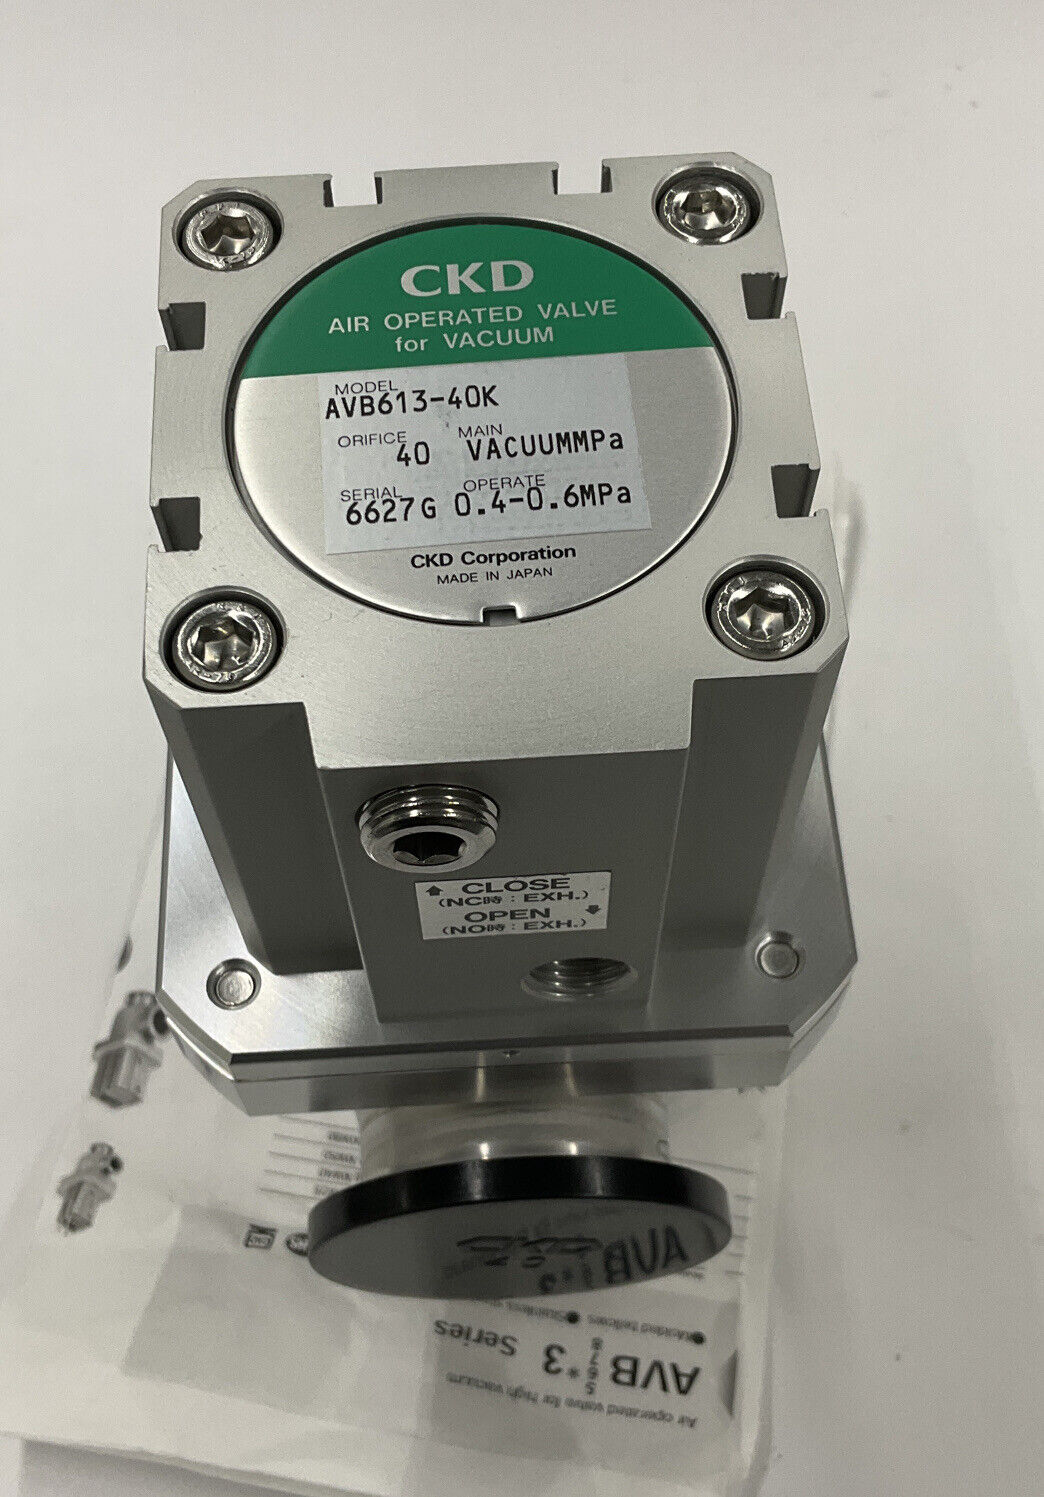 CKD AVB613-40K New Air Operated Valve for Vacuum 0.4-0.6MPa (YE151)